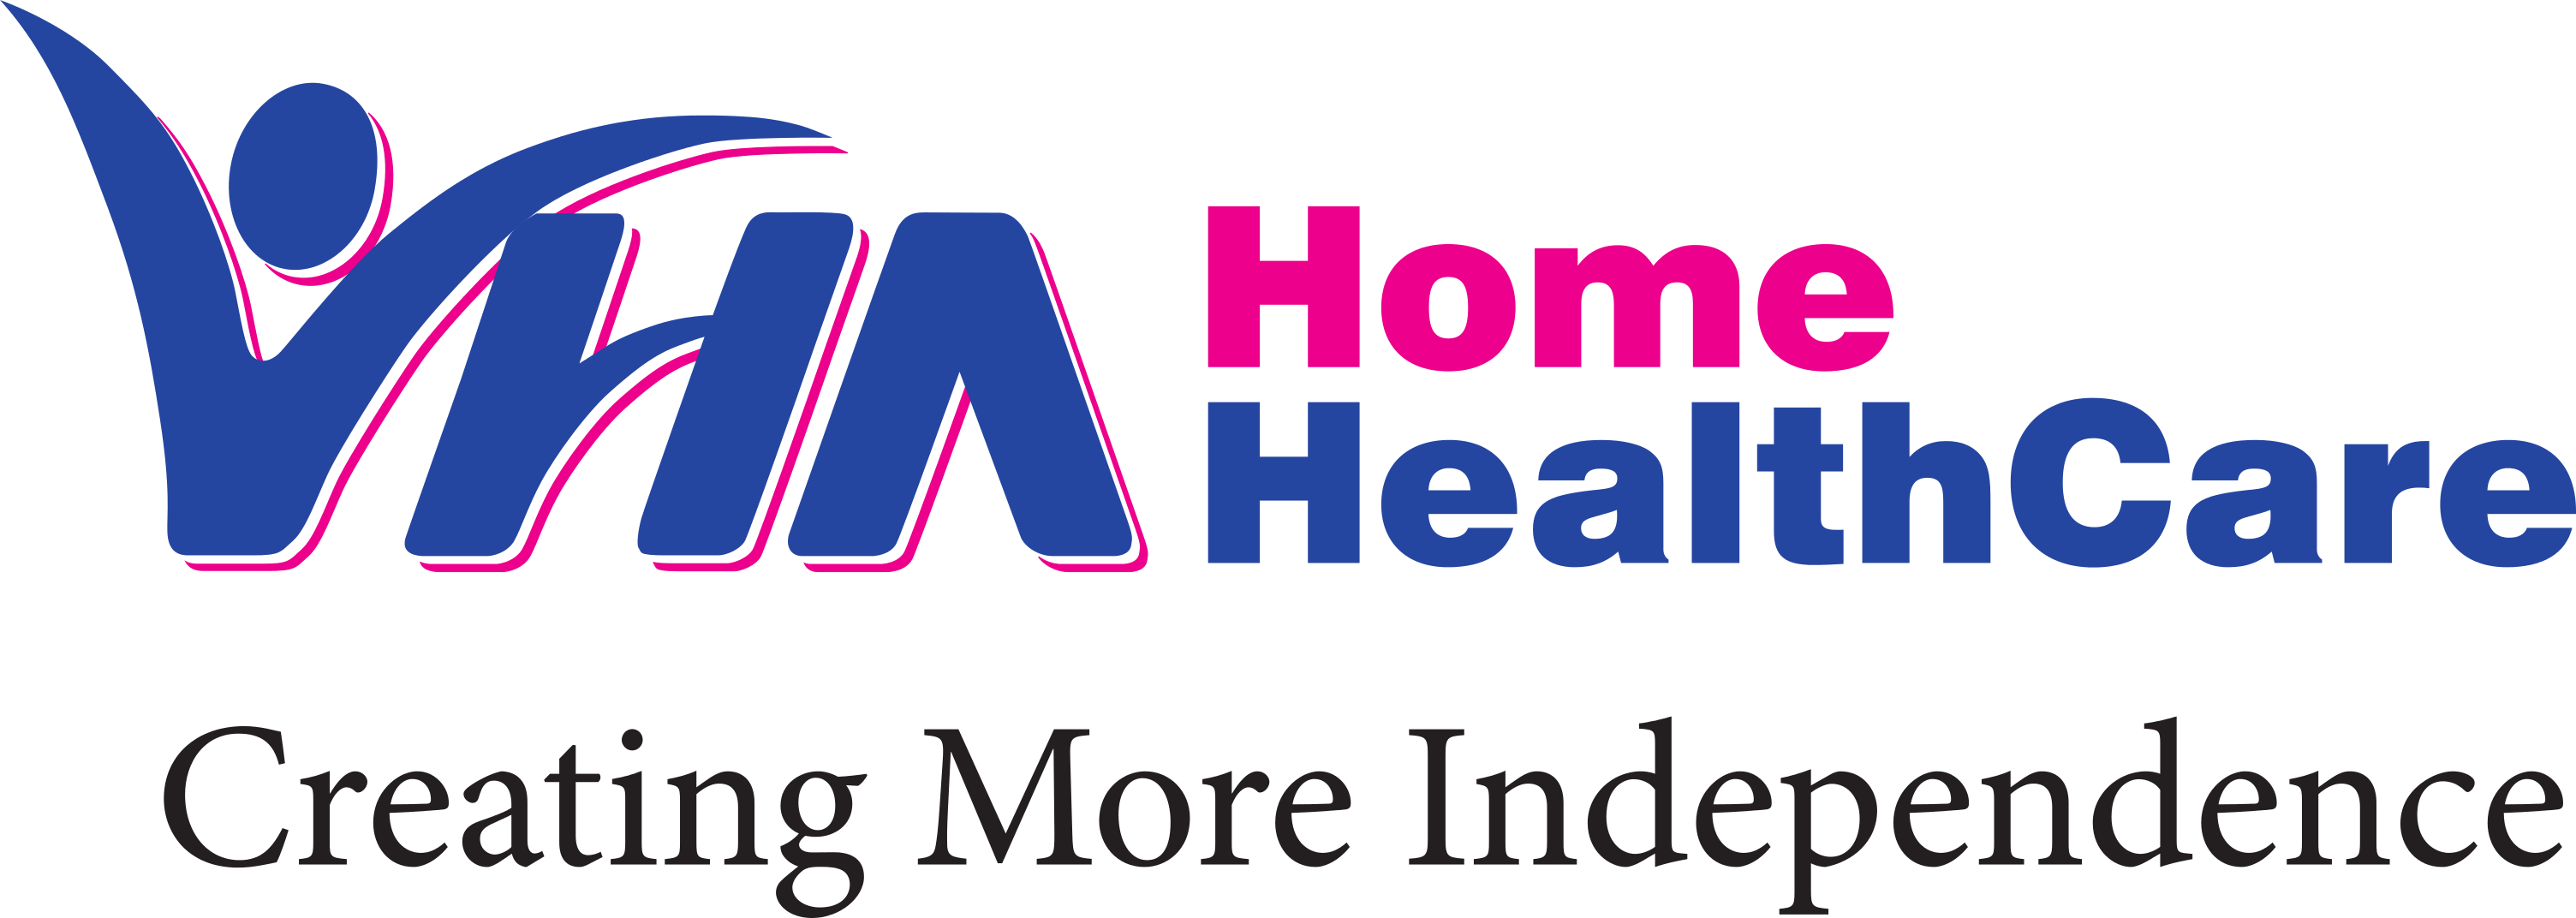  VHA Home HealthCare